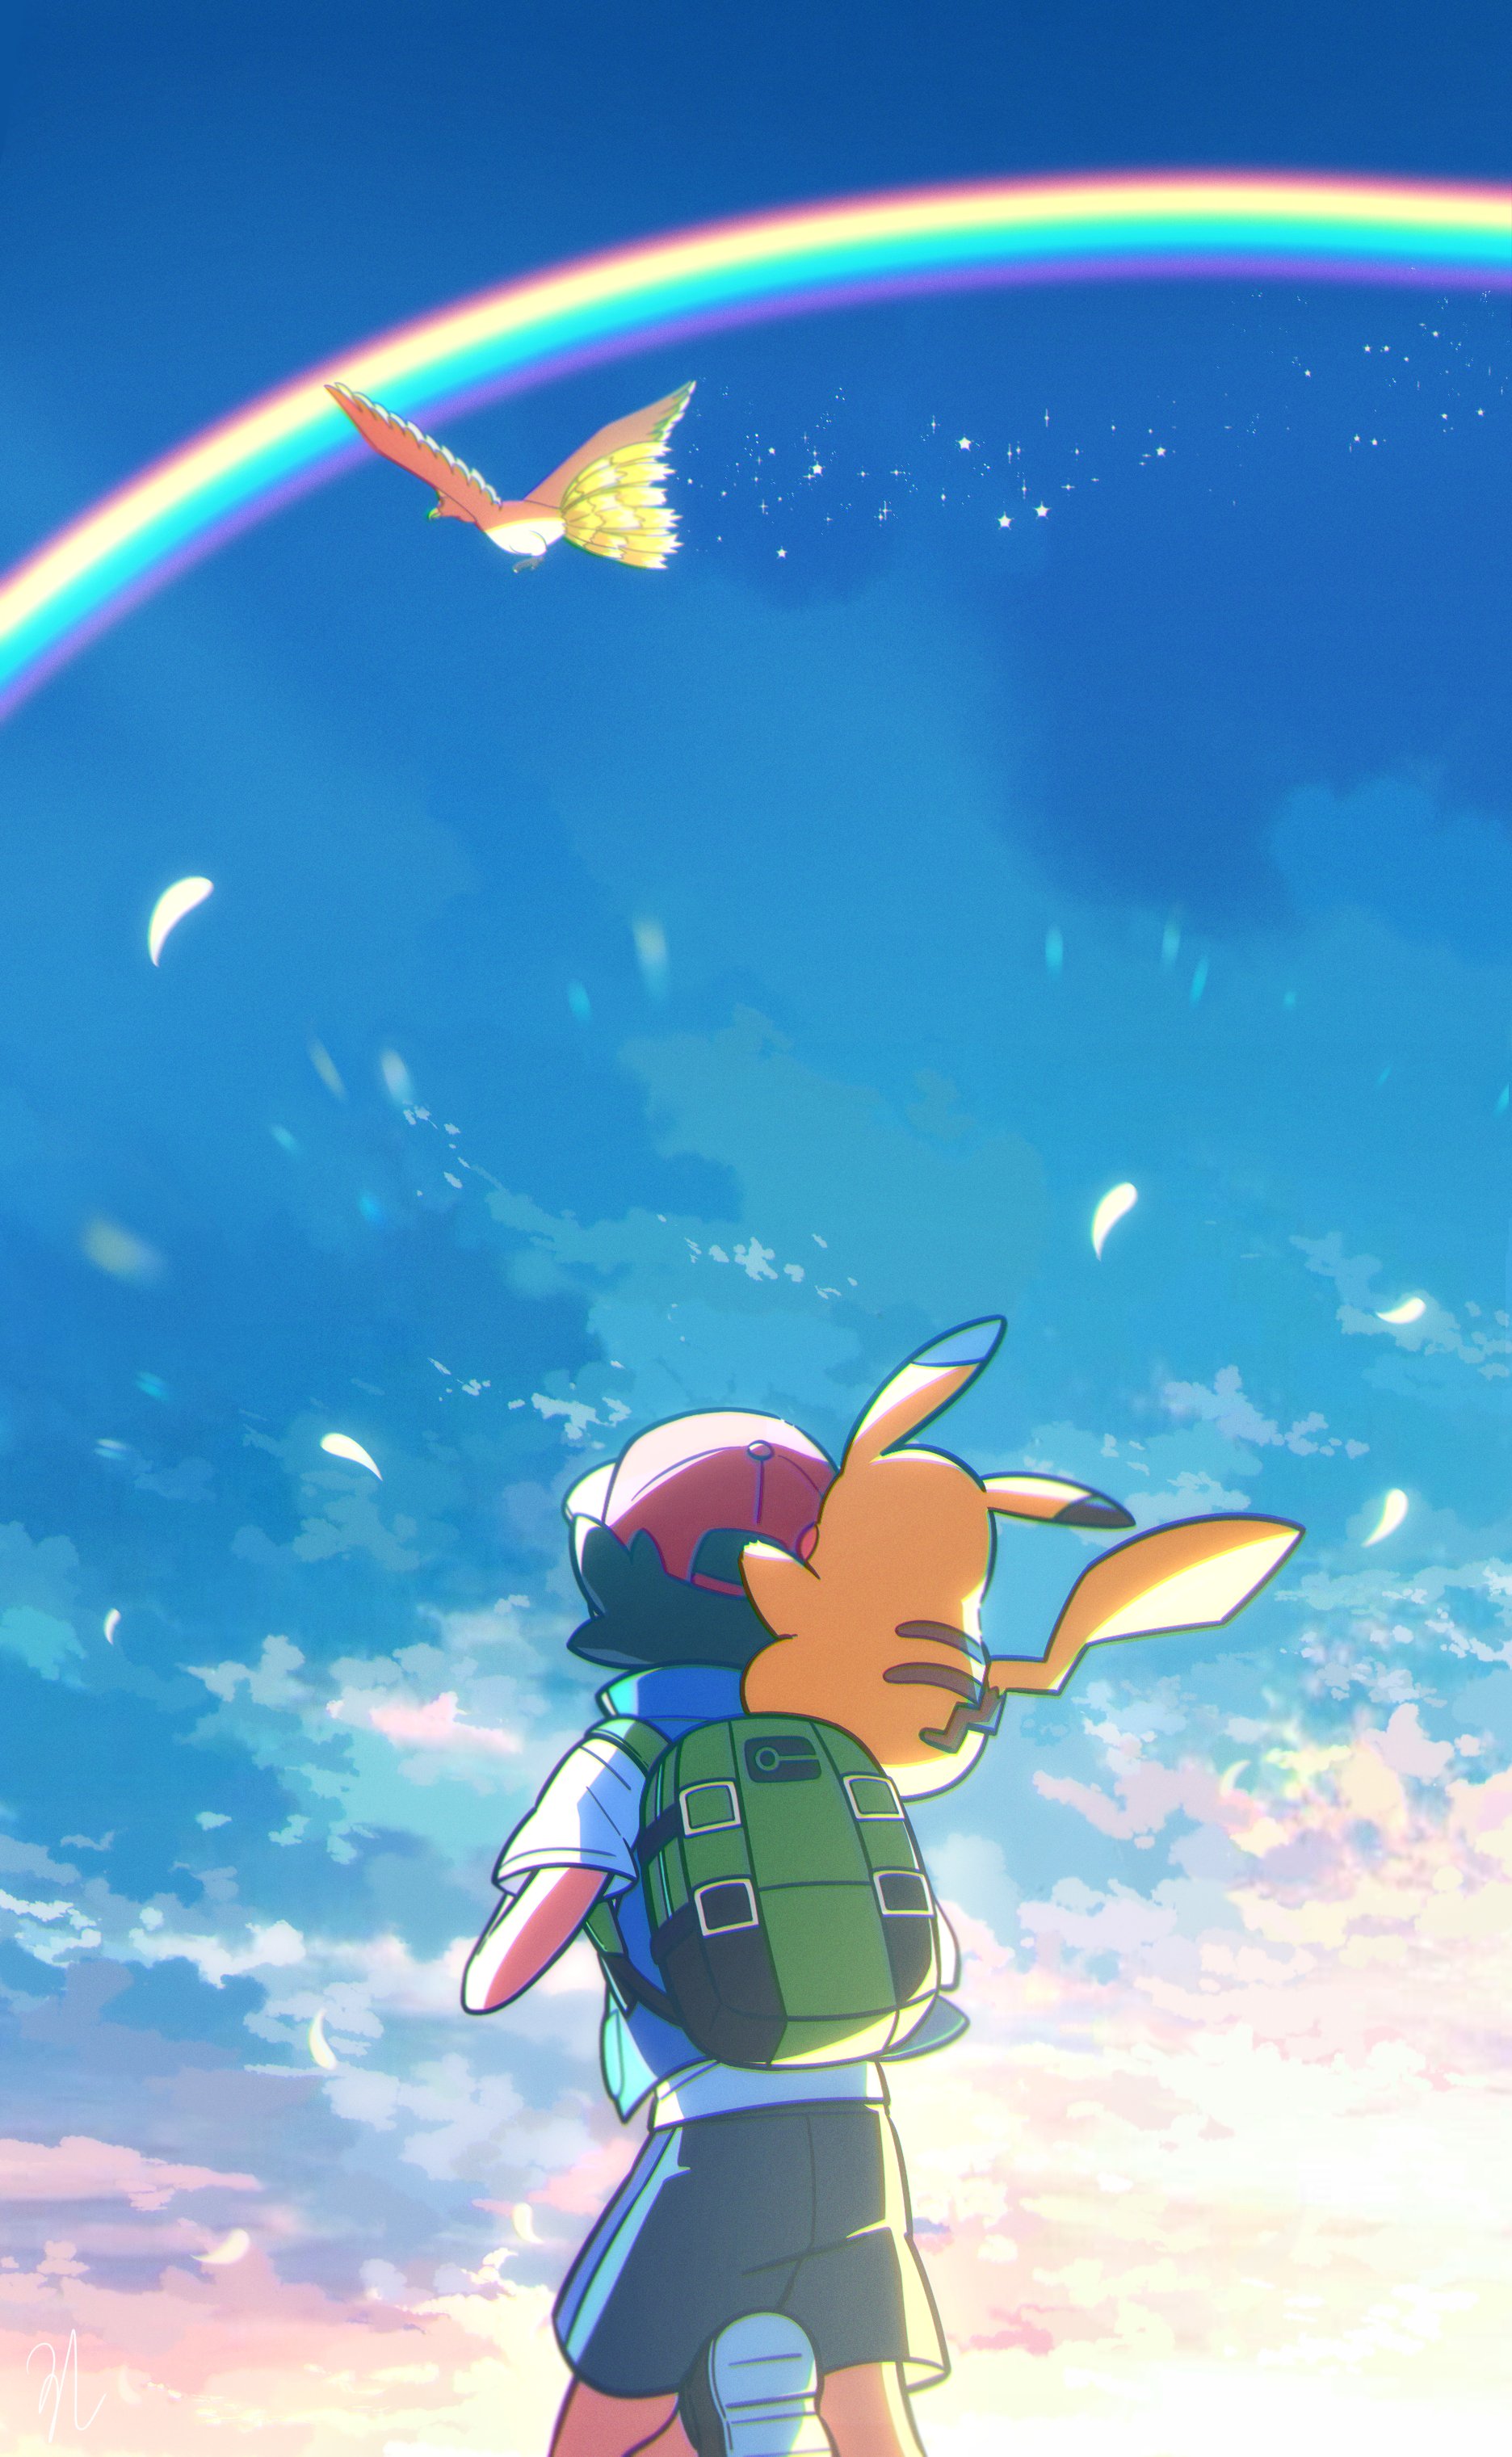 Wallpaper ID 363413  Anime Pokémon Phone Wallpaper Ash Ketchum Pikachu  1080x2340 free download